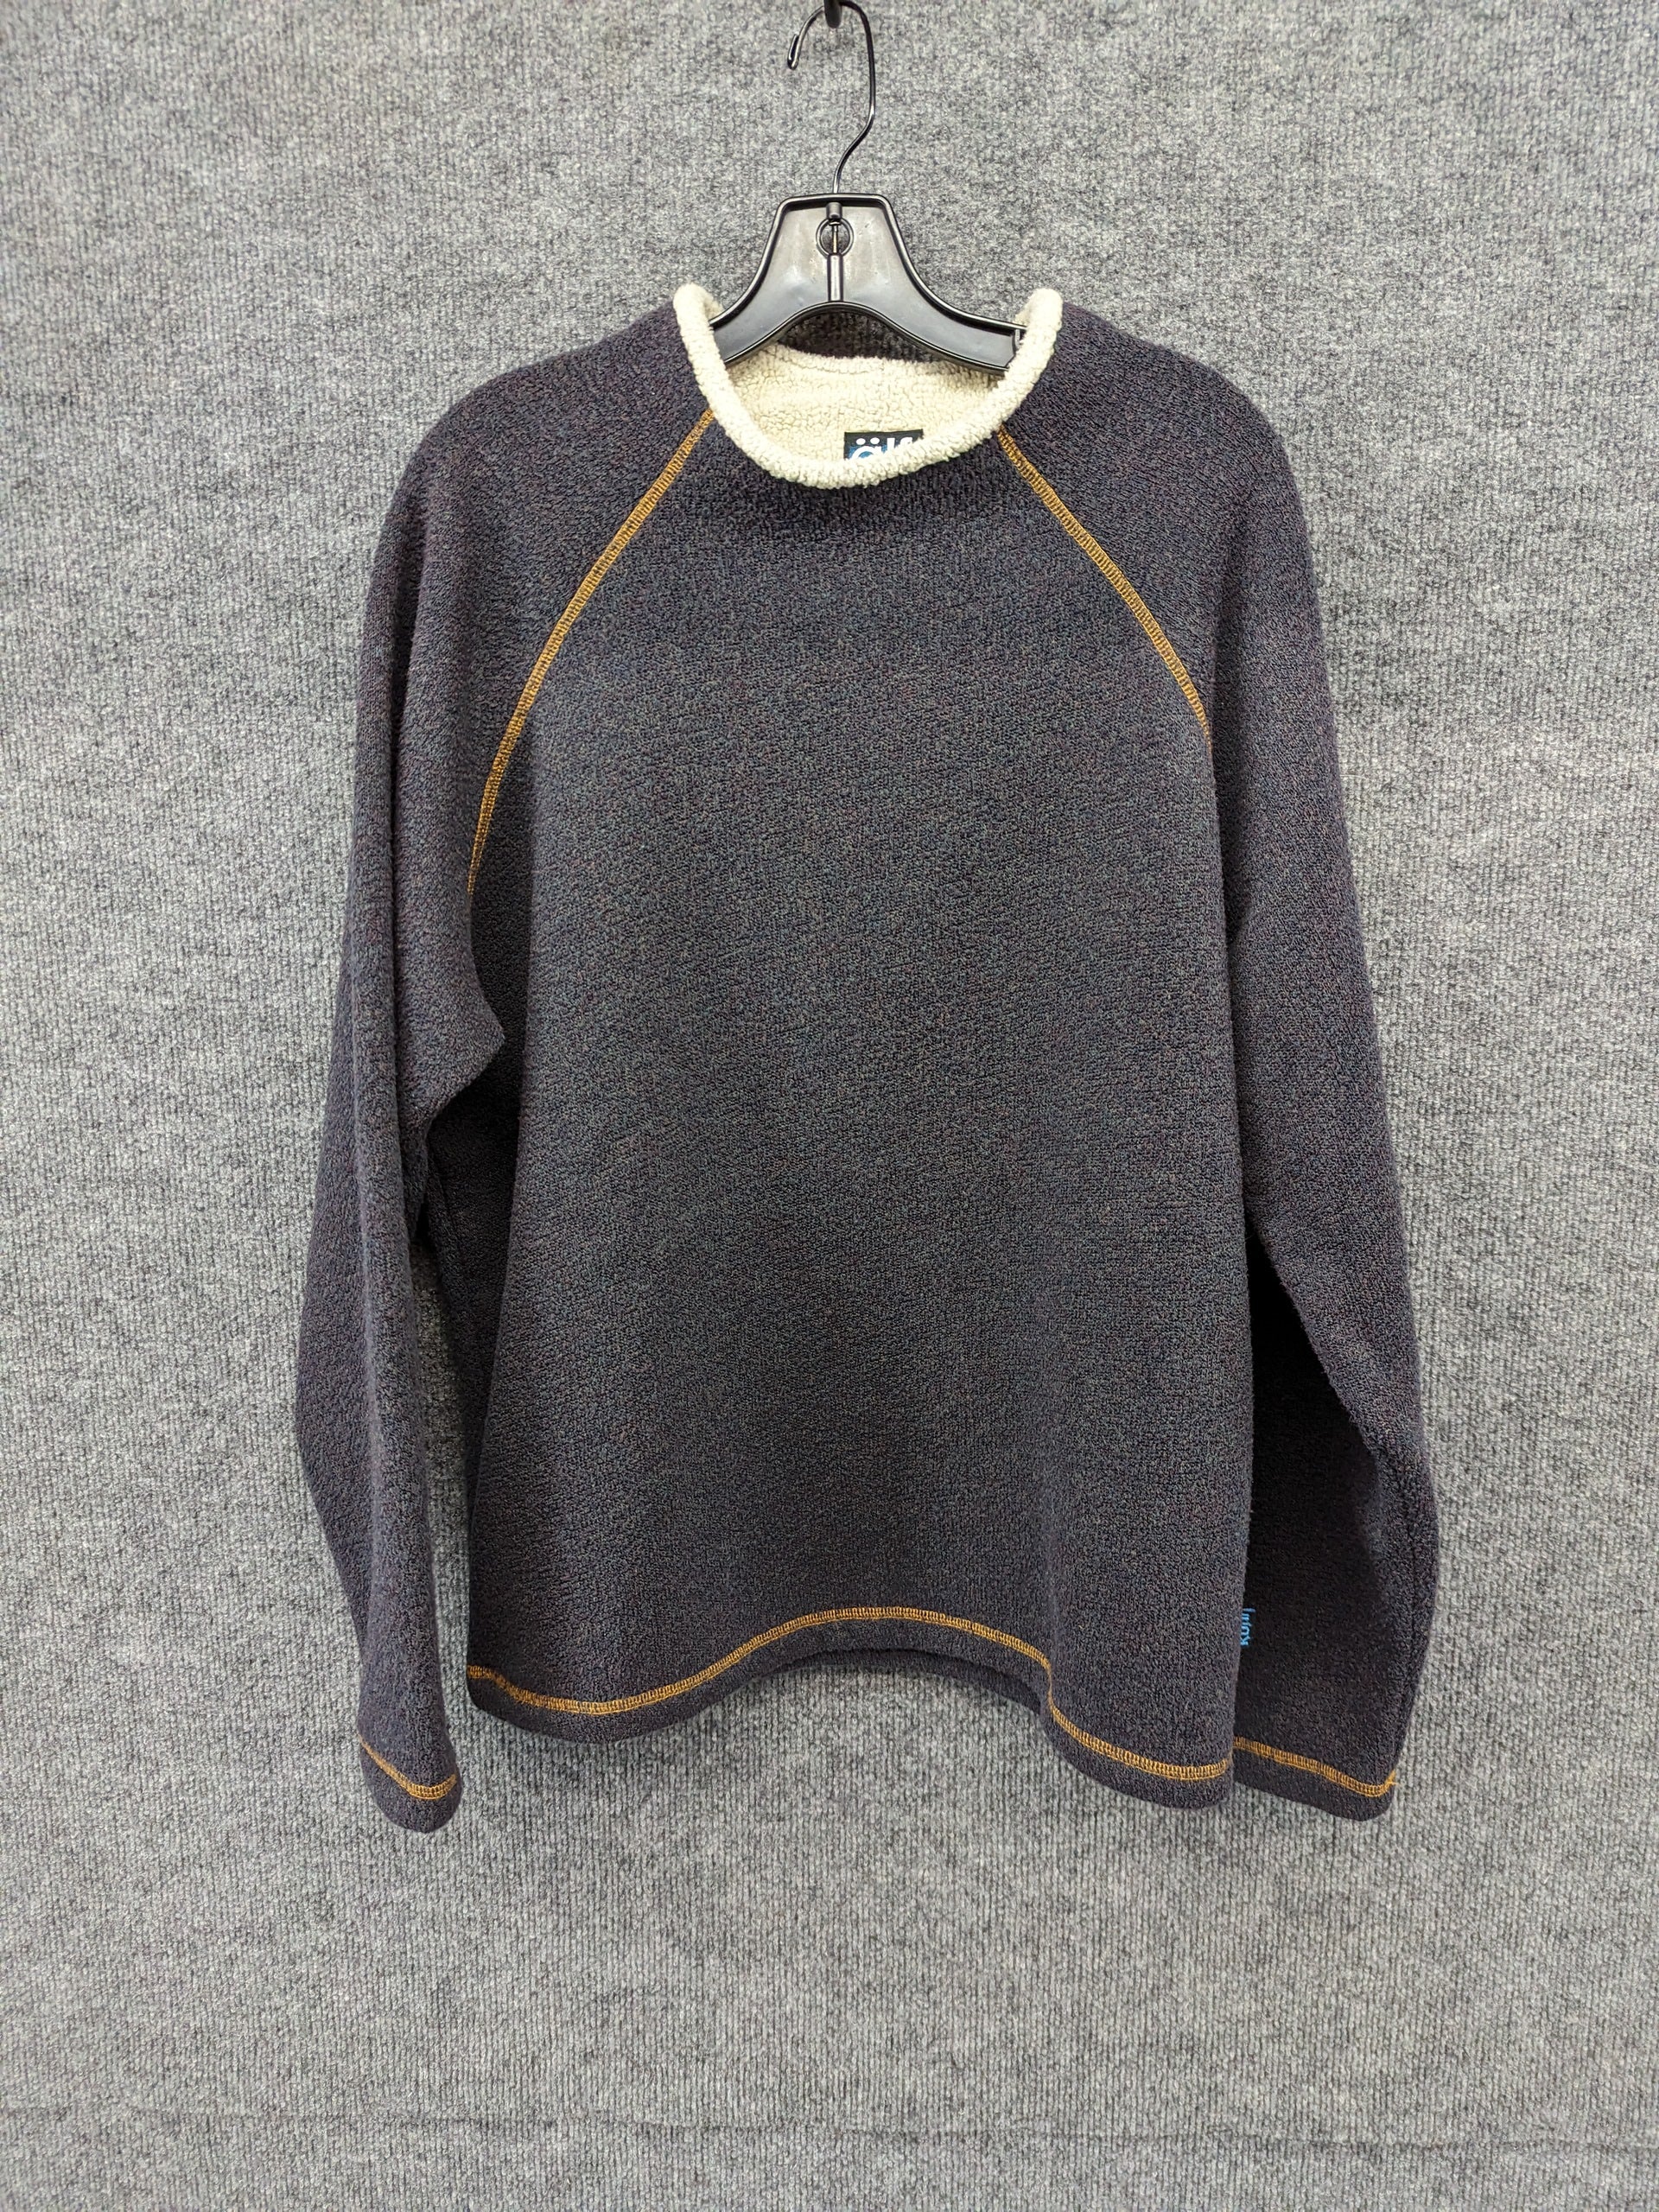 Kuhl Size W Large Women's Sweater – Rambleraven Gear Trader